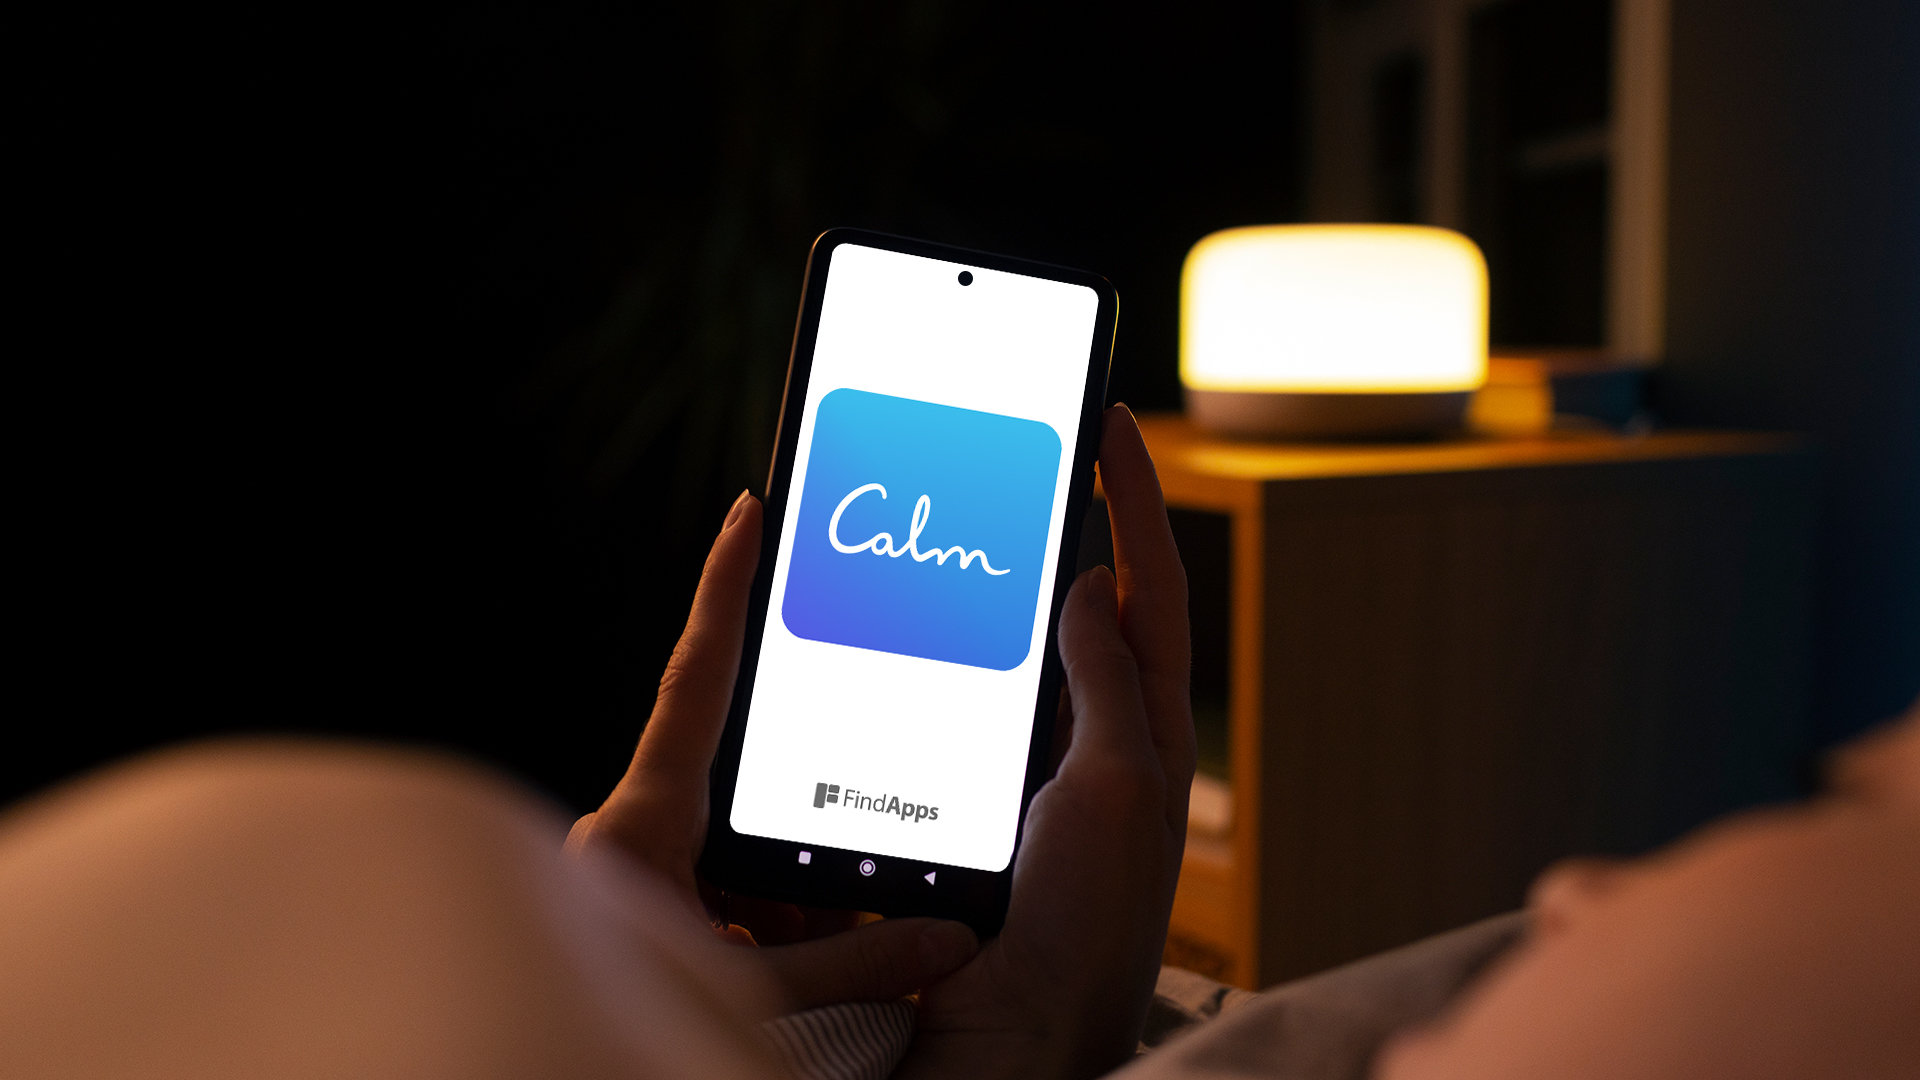 Calm - Sleep, Meditate, Relax app review